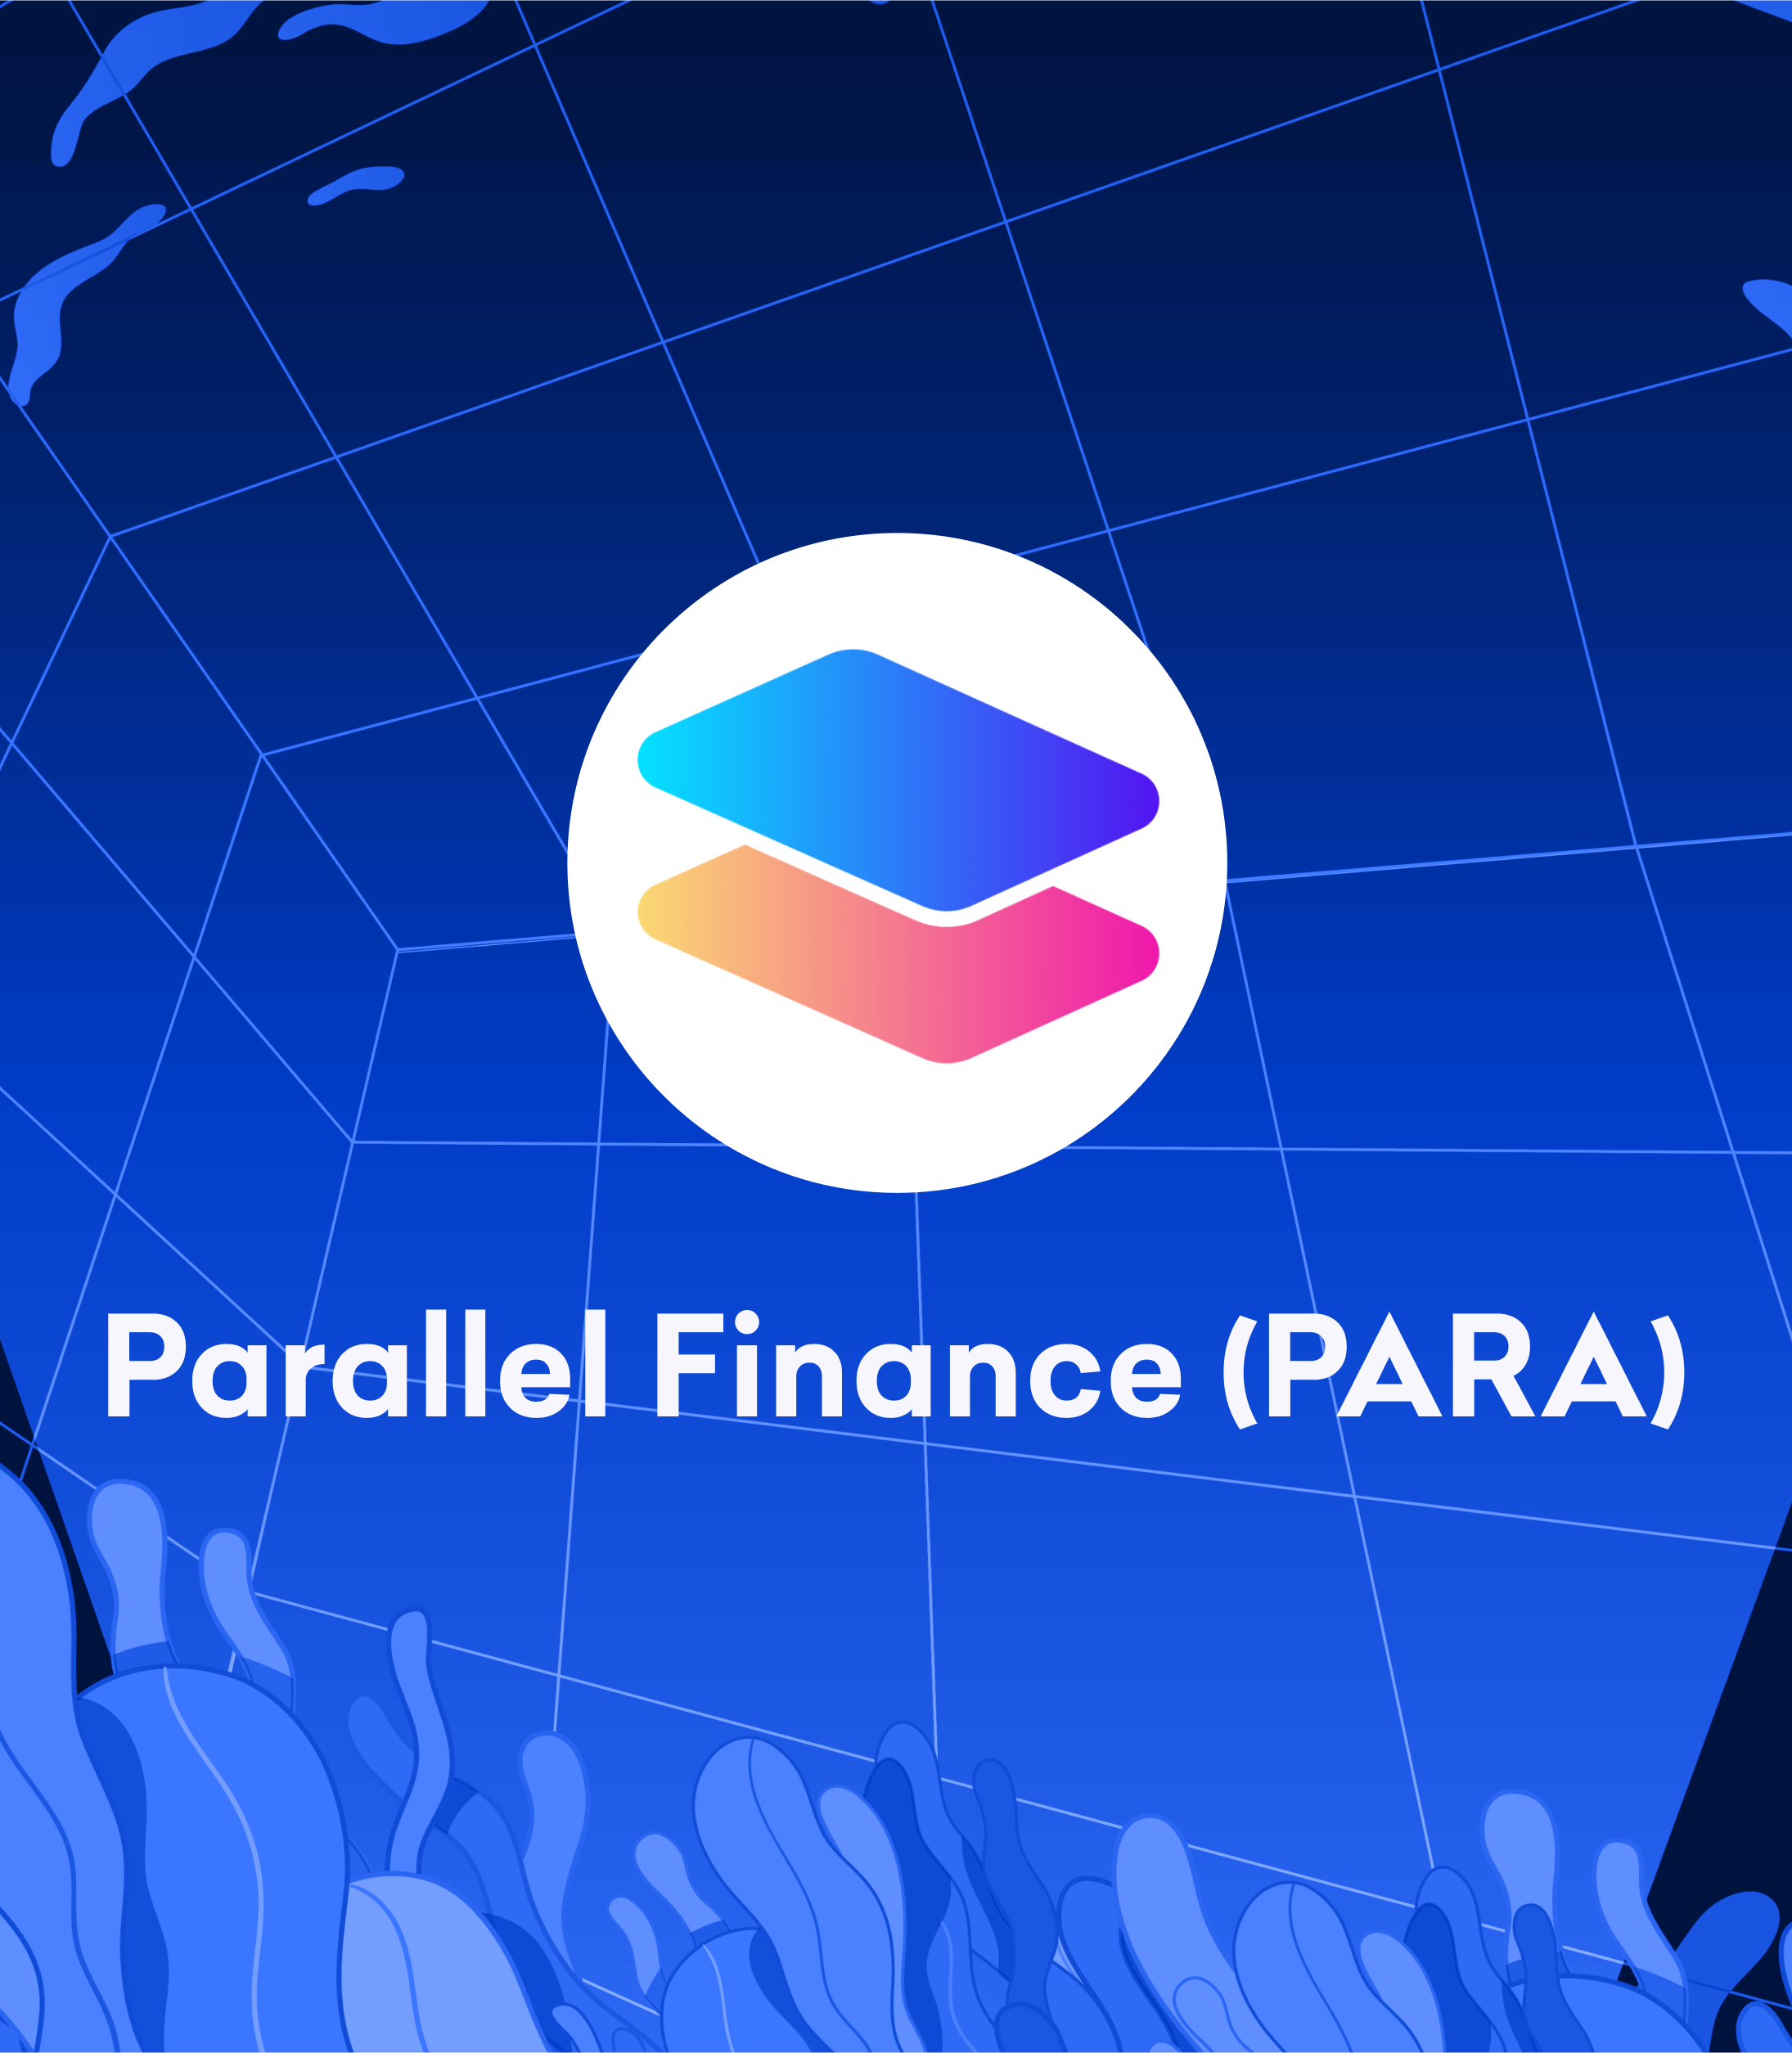 Trading for PARA Starts September 7 - Deposit Now!